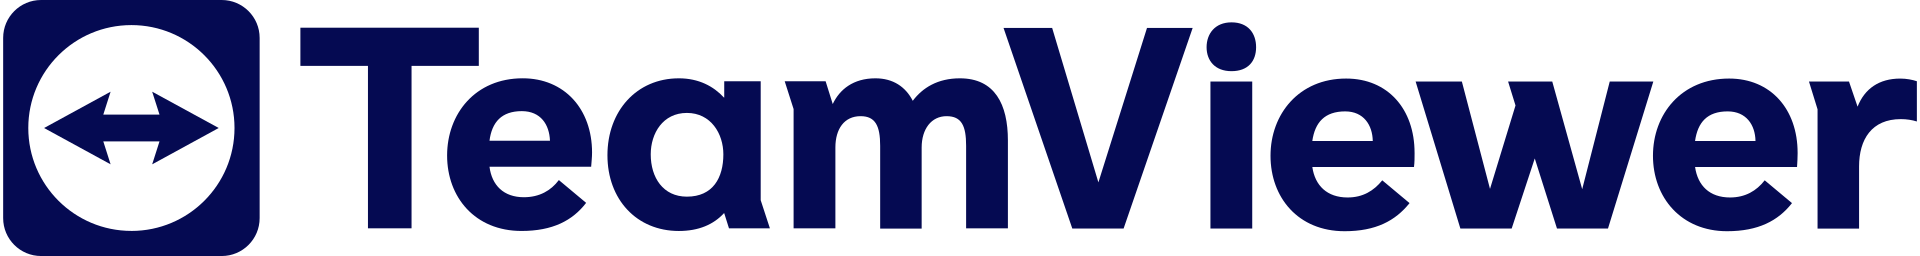 Logo_TeamViewer